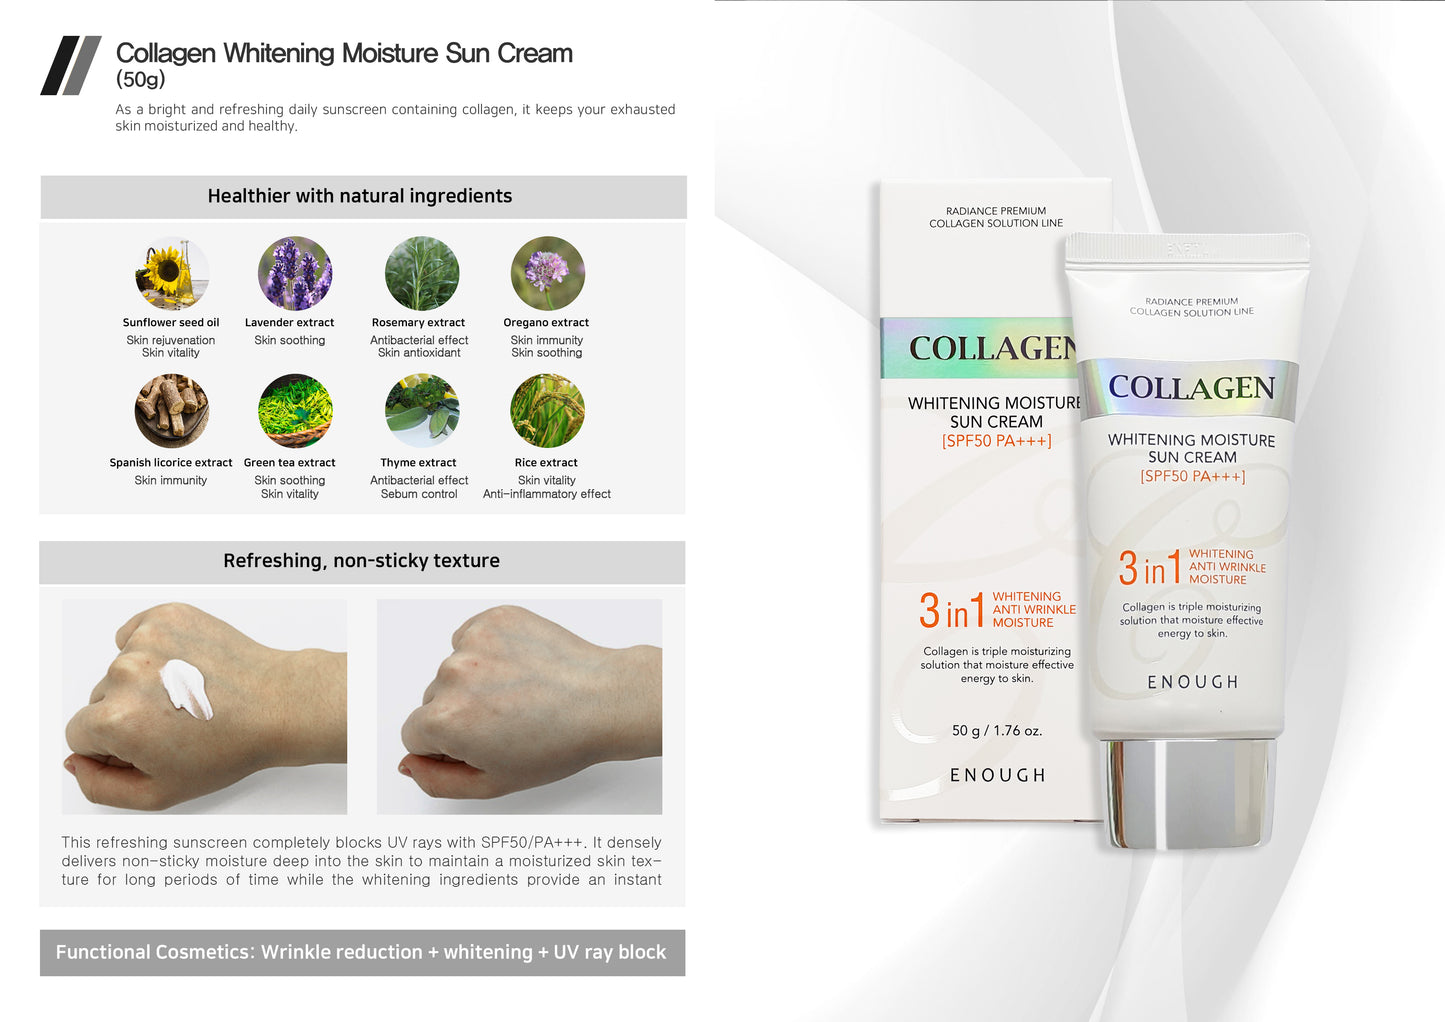 ENOUGH 3in1 Collagen Whitening Moisture Sun Cream SPF 50 PA+++ (50gr)